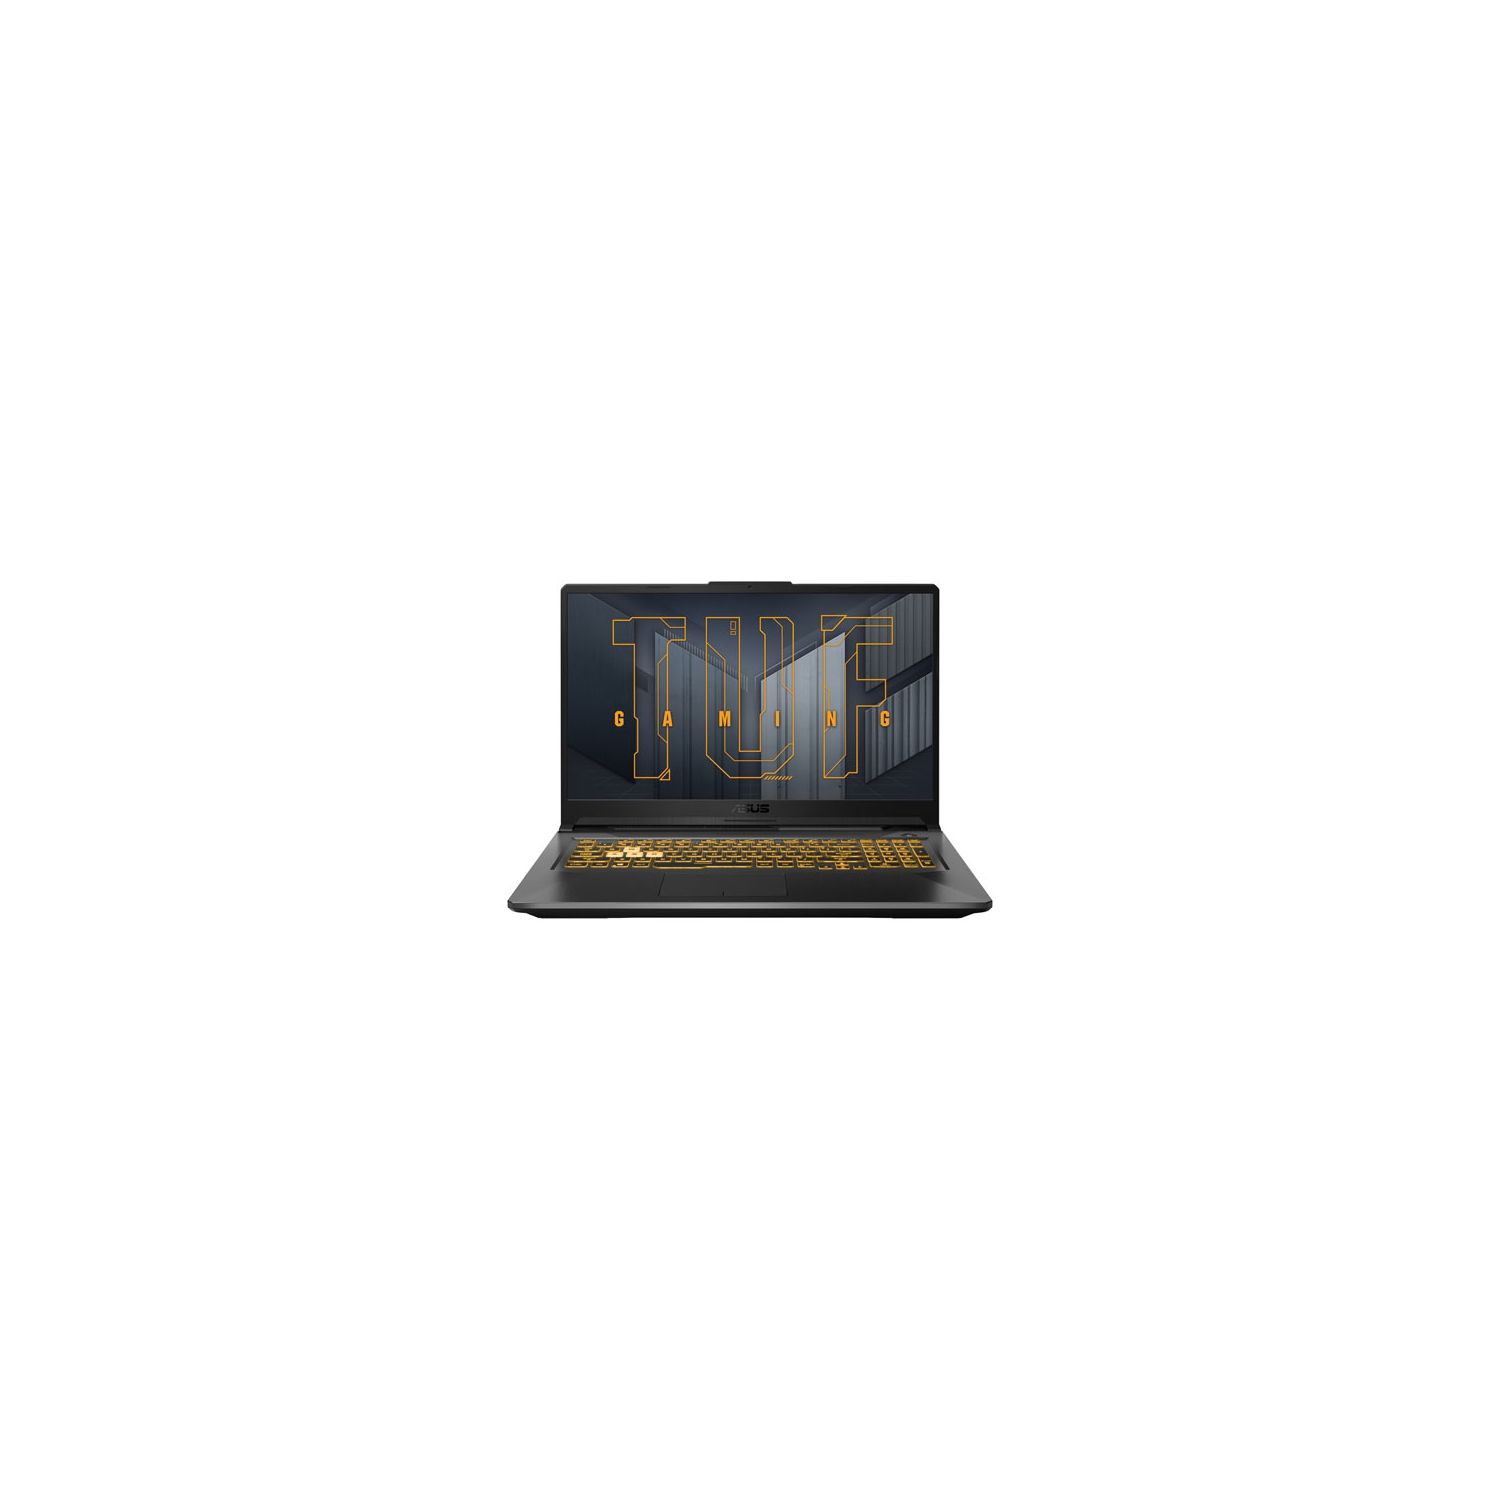 ASUS TUF A17 17.3" Gaming Laptop - Grey (AMD Ryzen 7 4800H/512GB SSD/16GB RAM/RTX 3050/Win10) - Refurbished